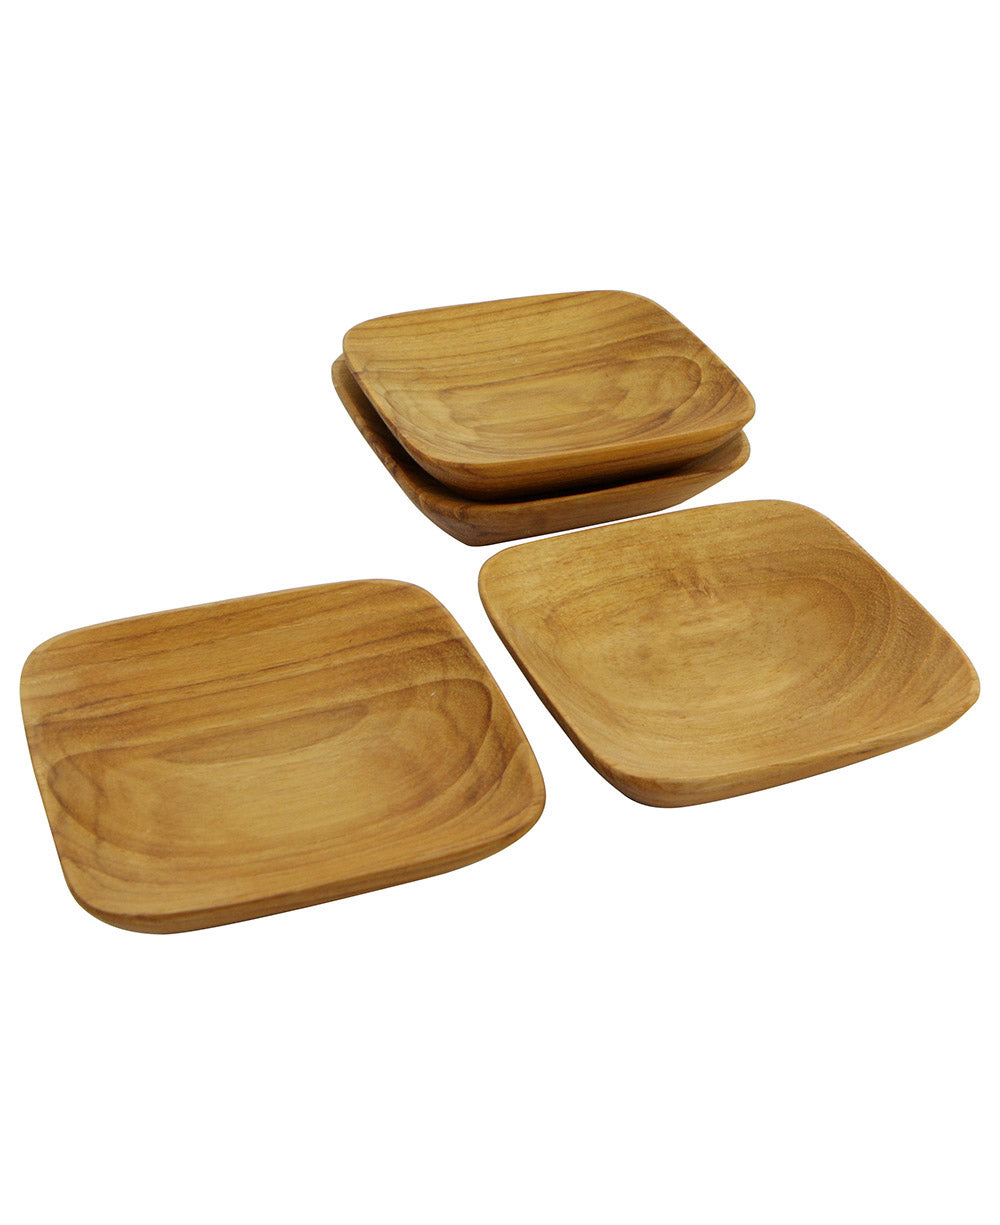 Wooden Pinch Bowls